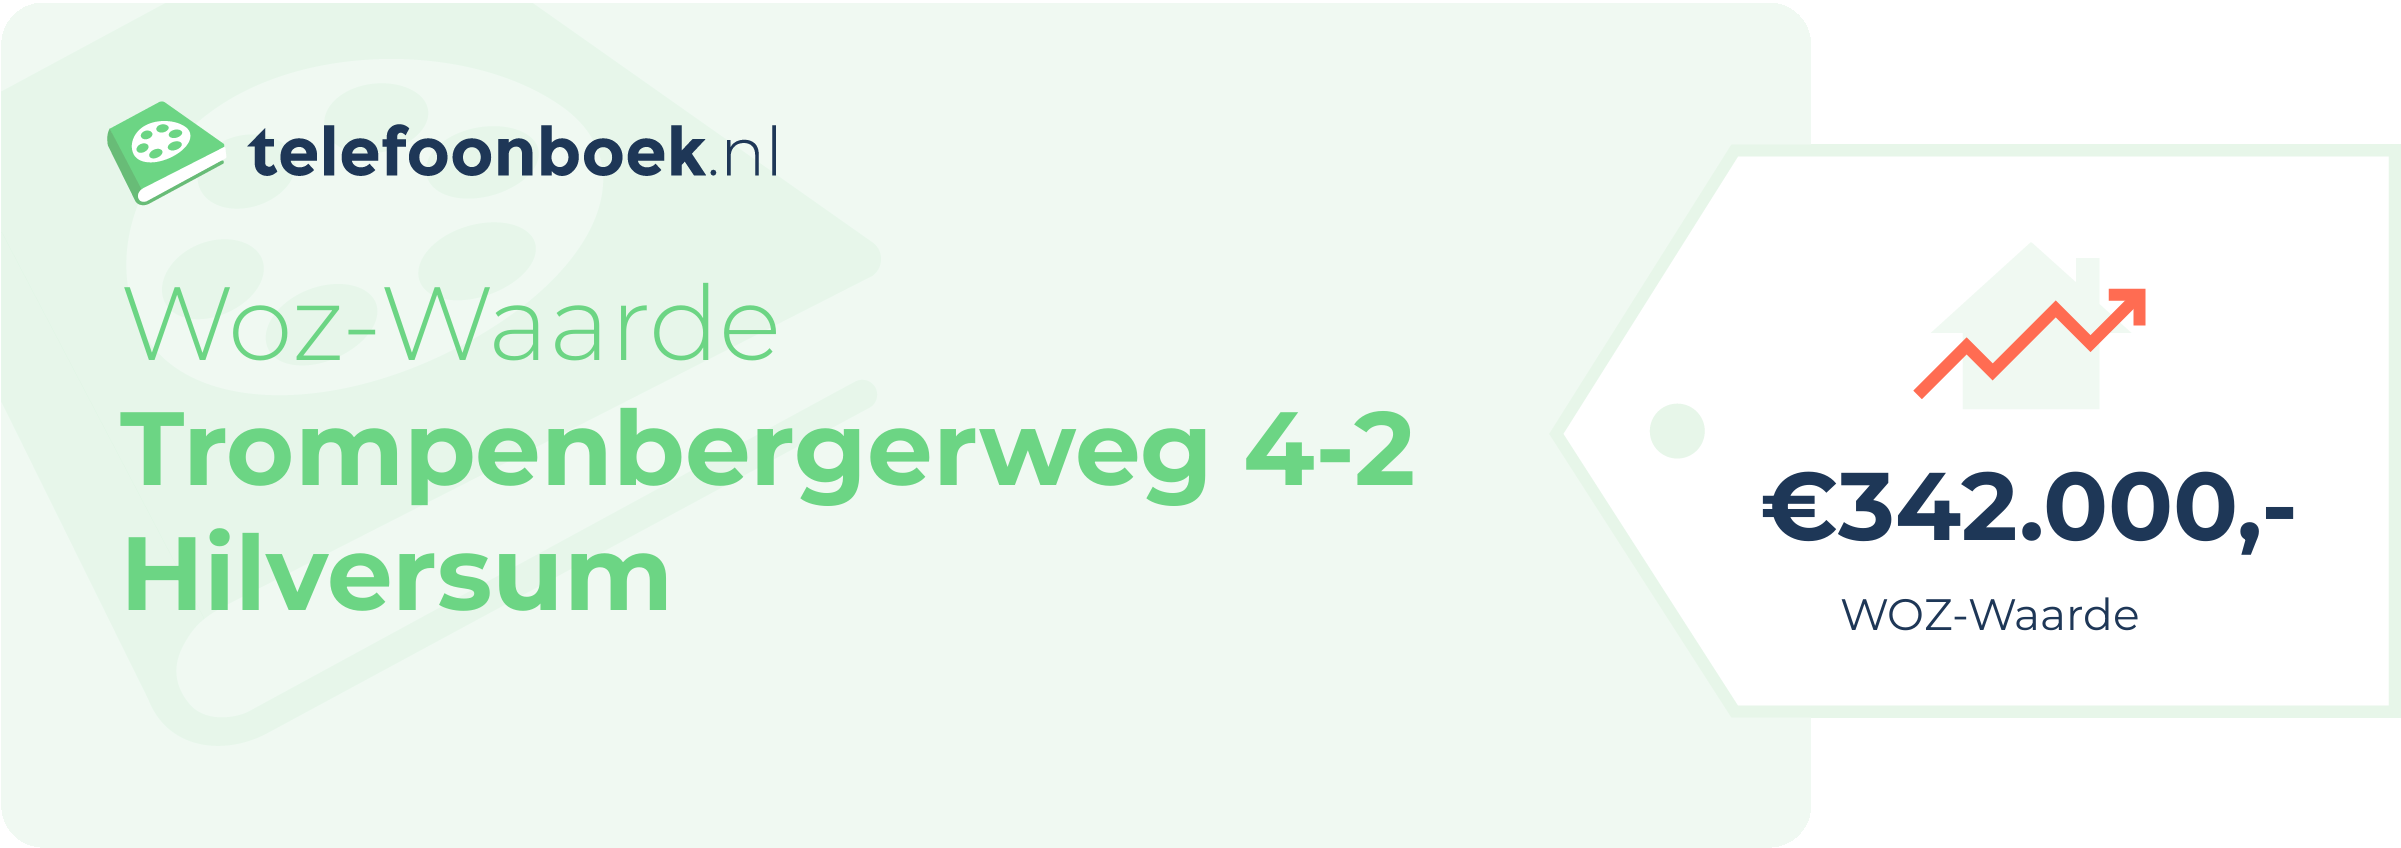 WOZ-waarde Trompenbergerweg 4-2 Hilversum